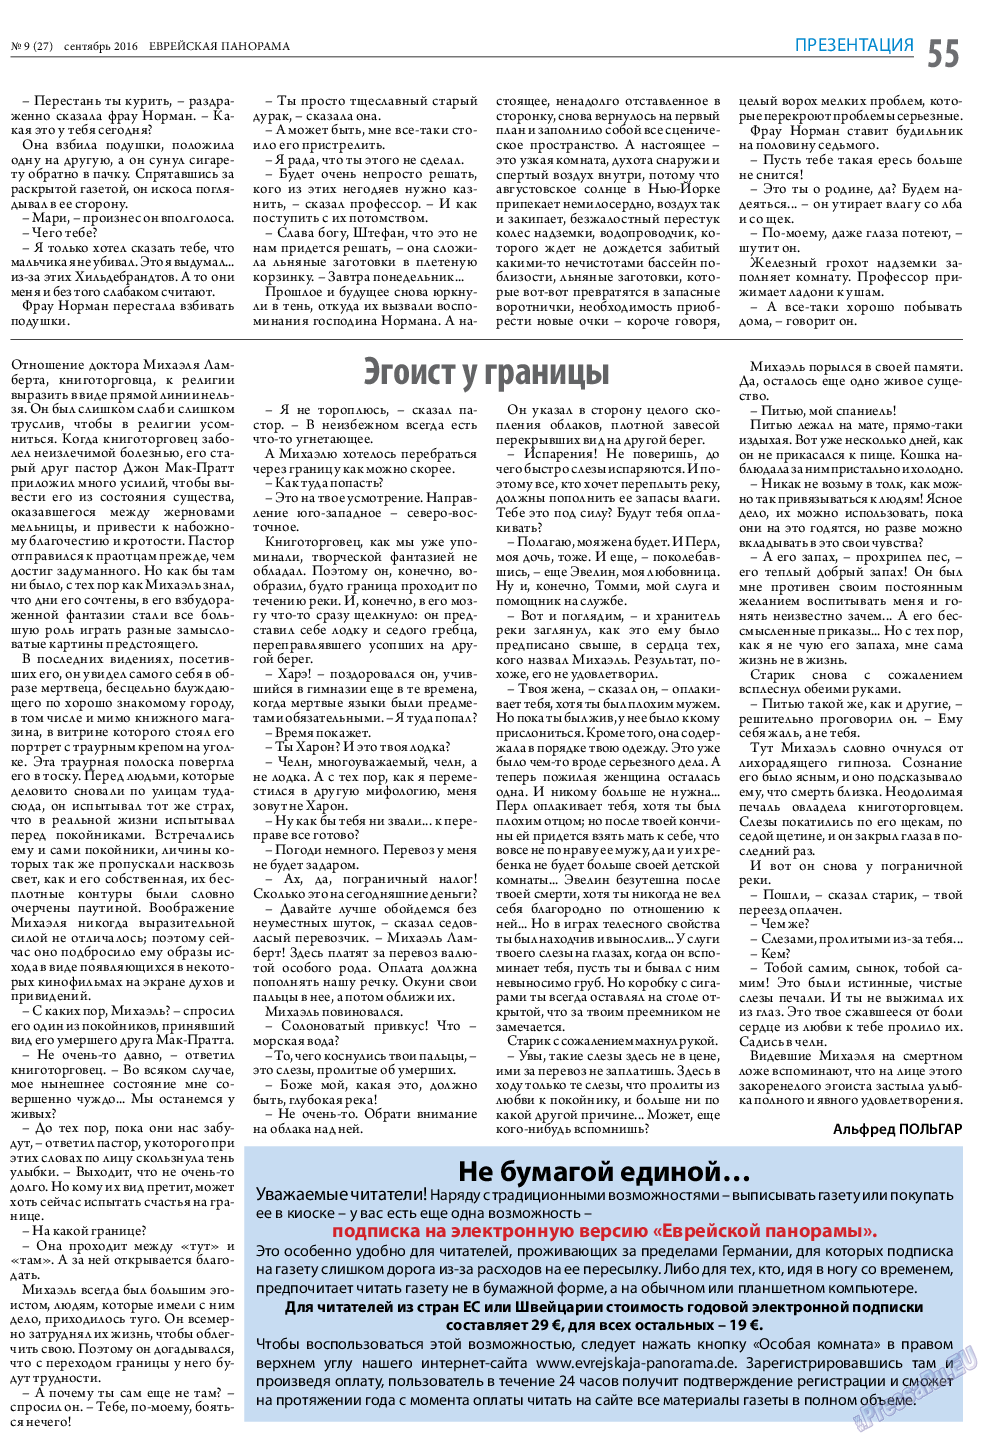 Еврейская панорама, газета. 2016 №9 стр.55